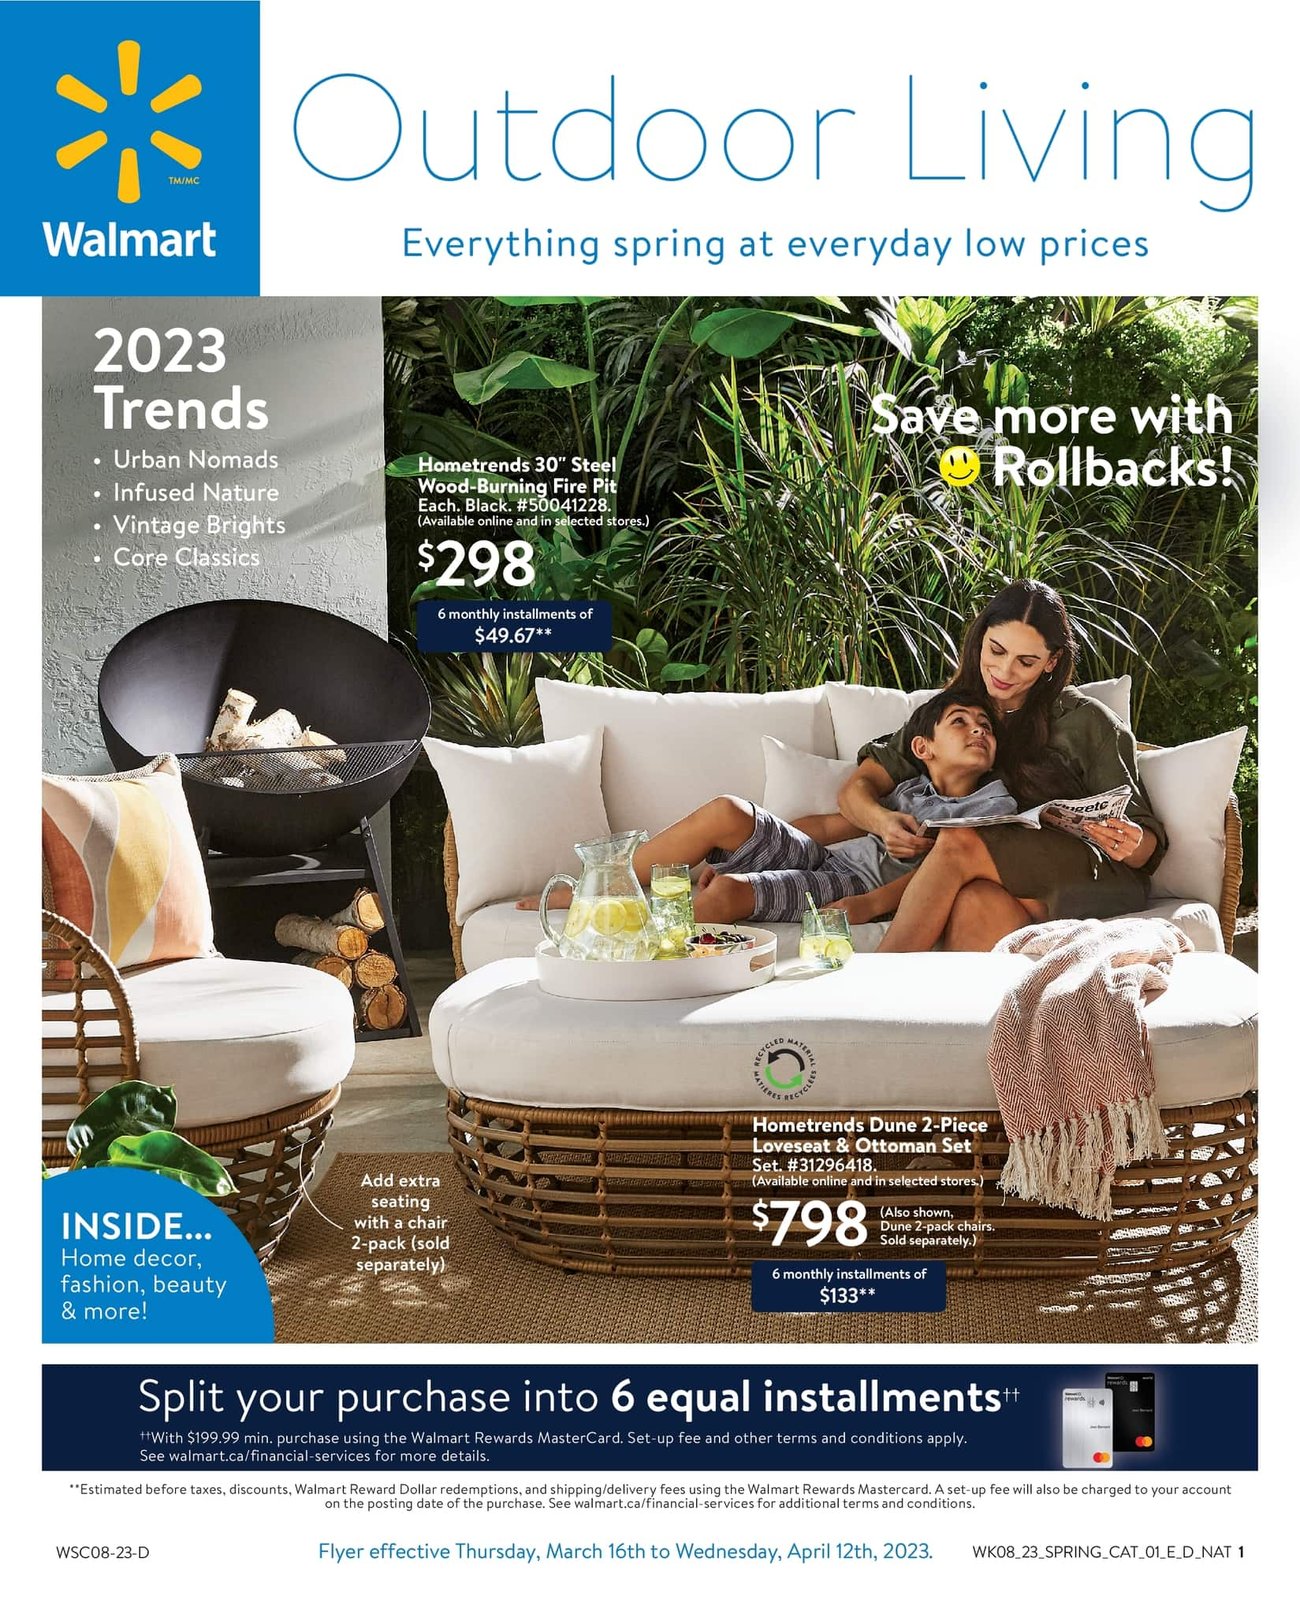 Walmart Canada - Outdoor Living - Page 1